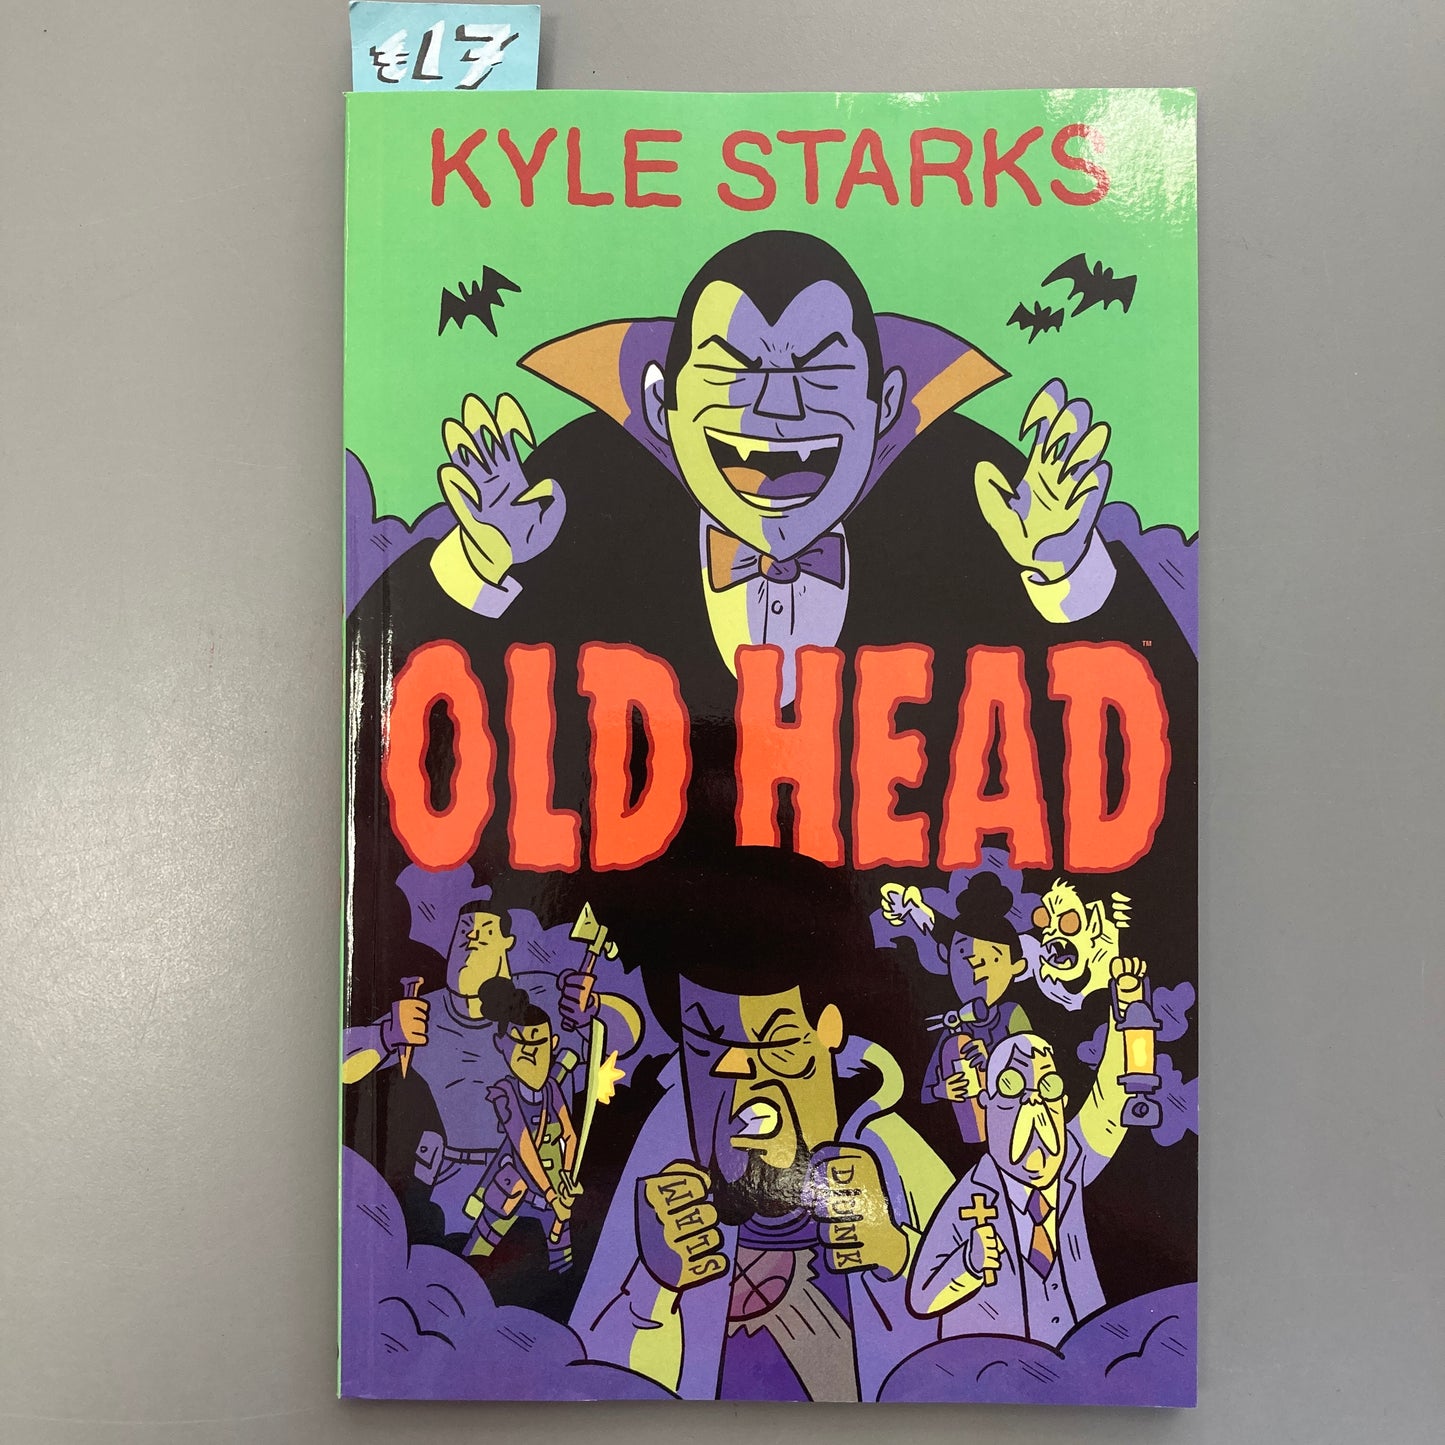 Old Head